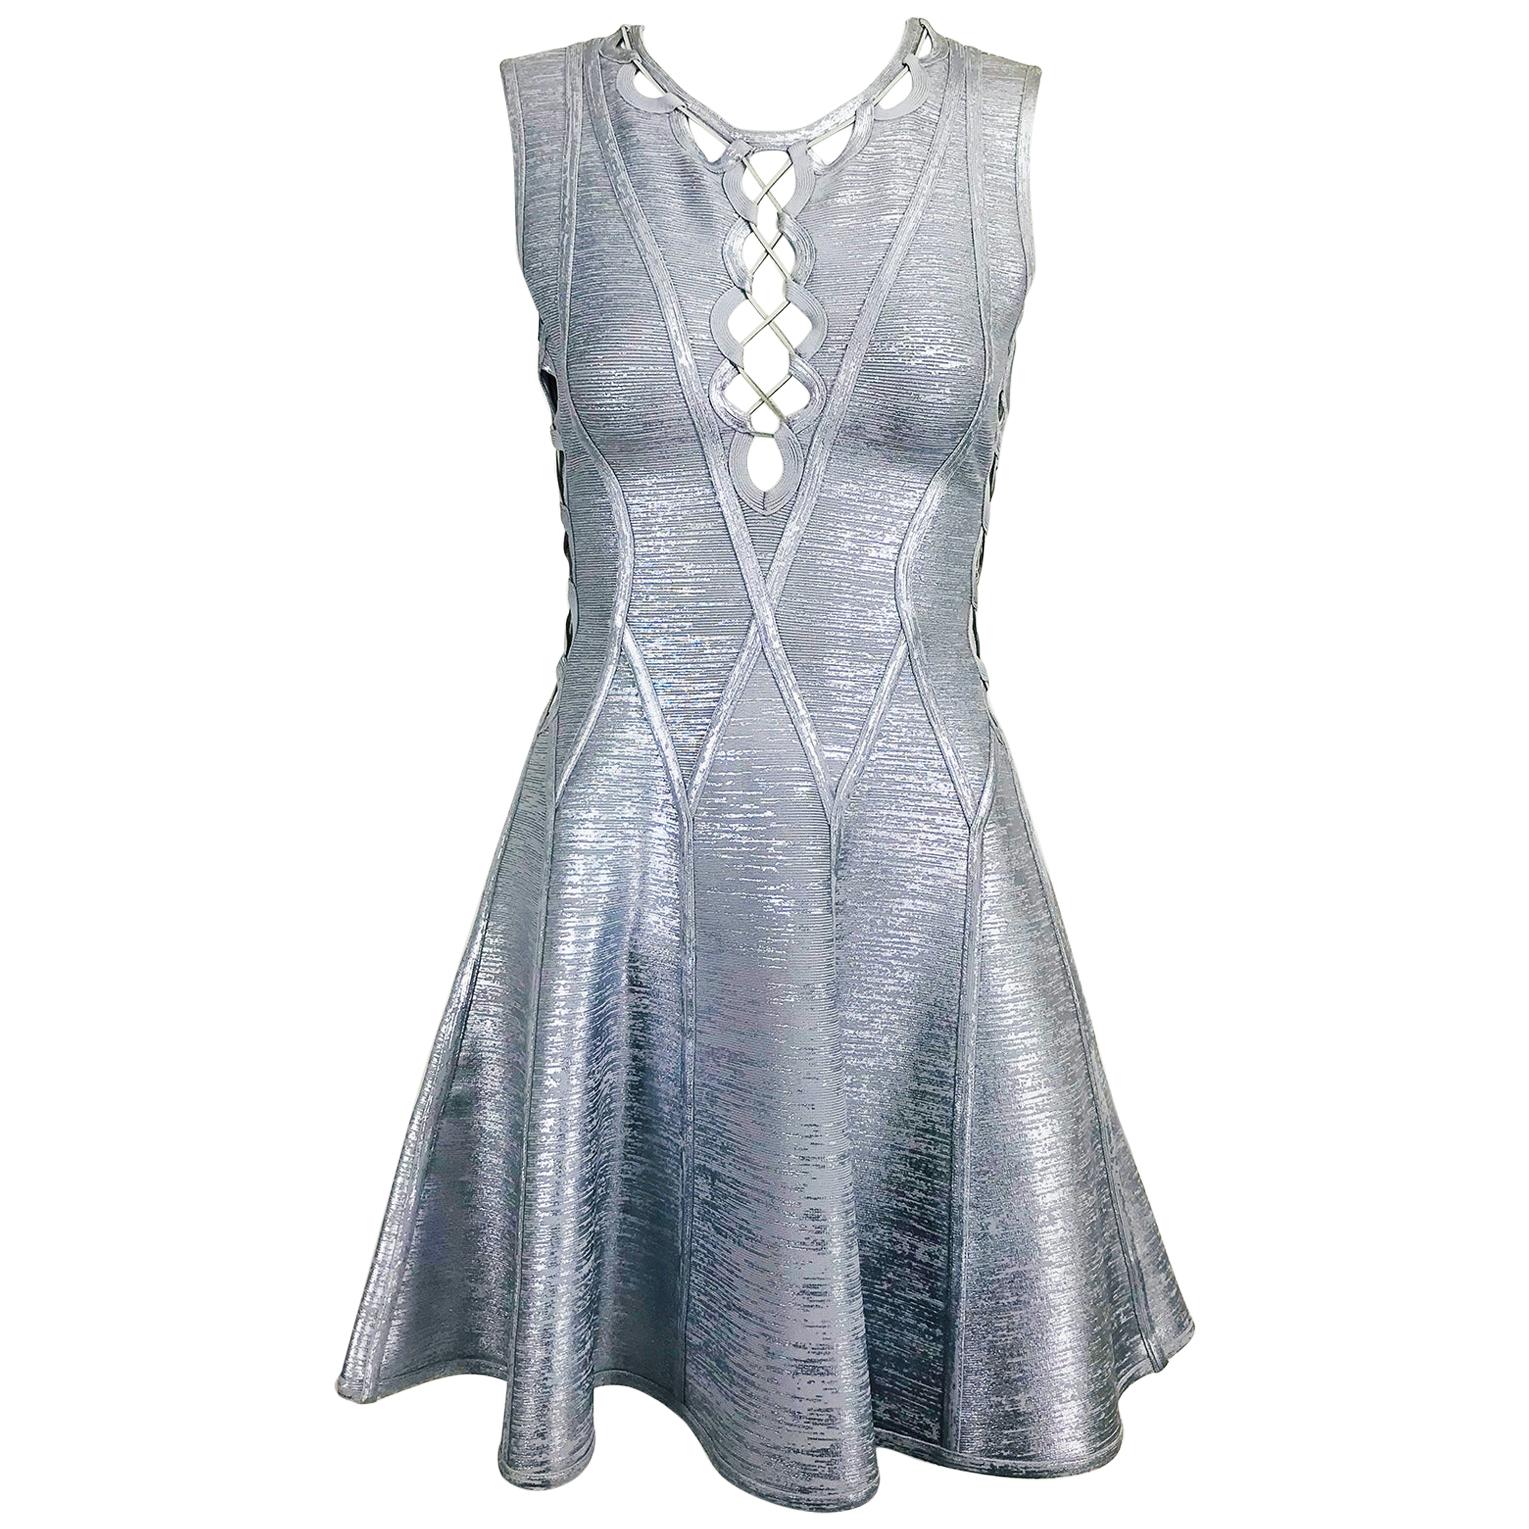 Herve Leger Silver Lavender Metallic Foil Lace Up Fit and Flare Bandage Dress